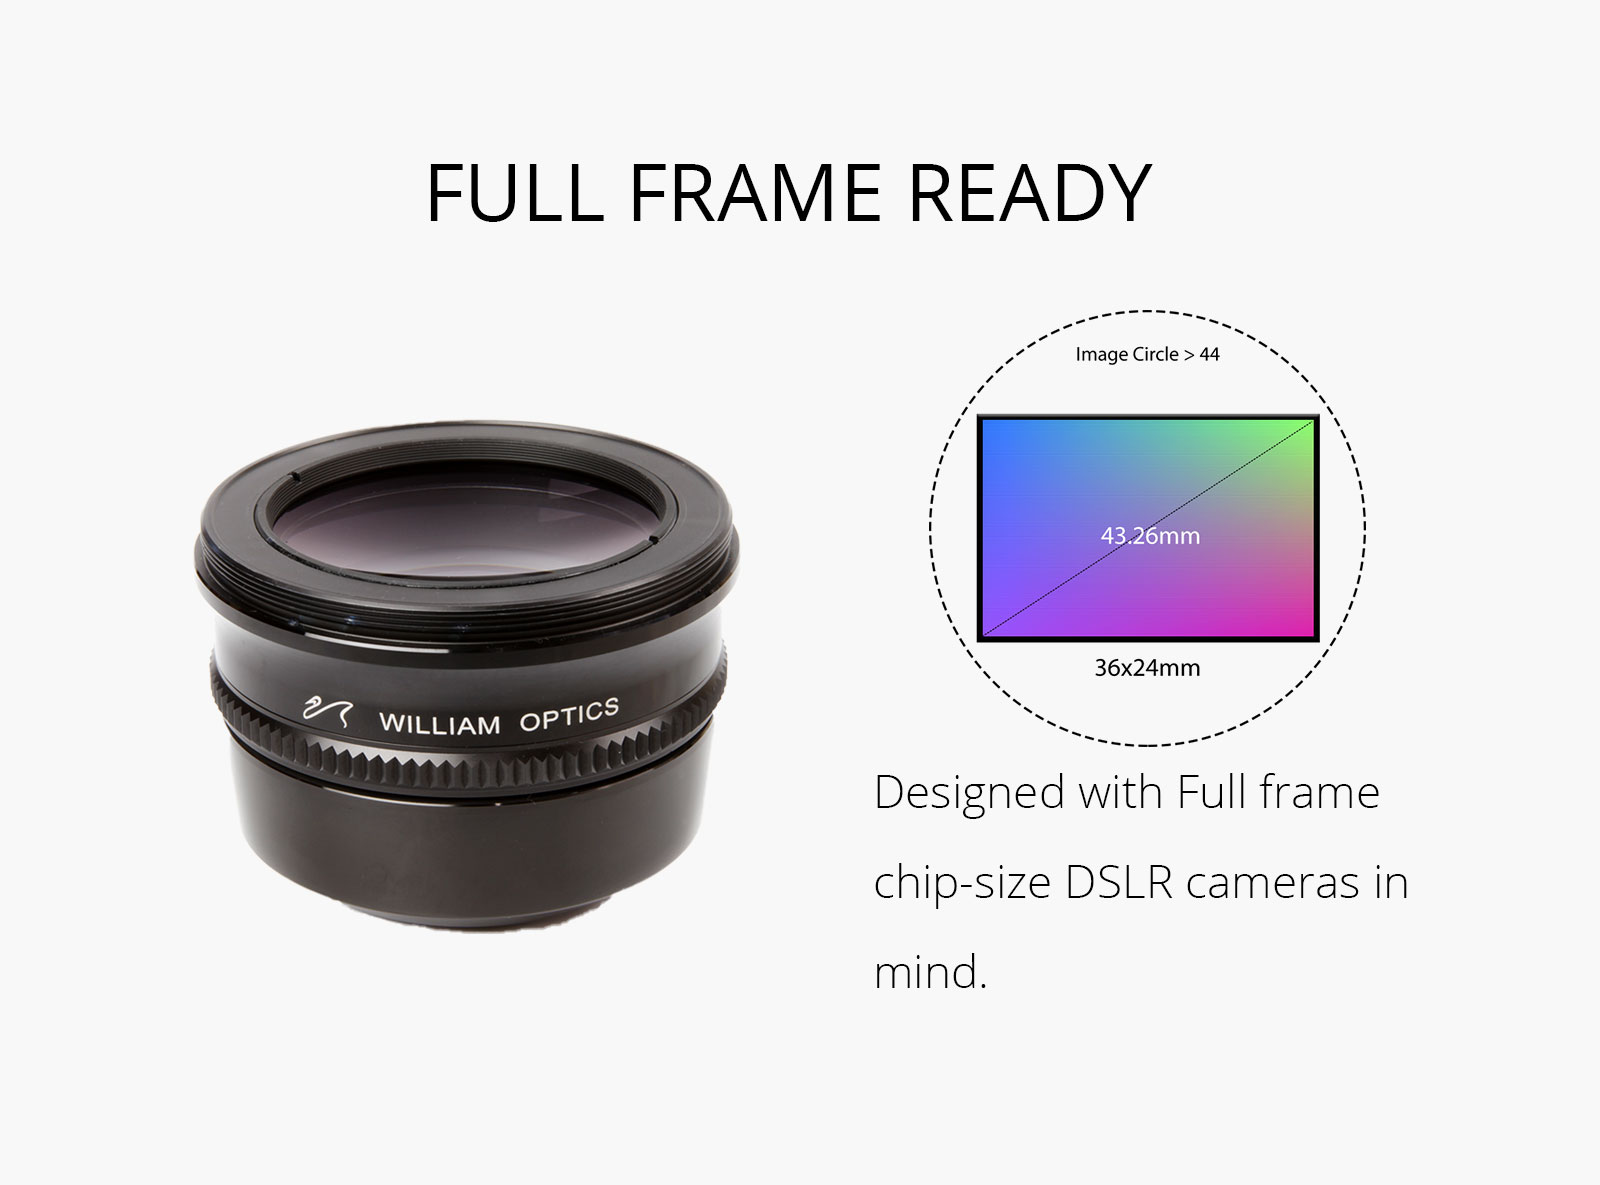 William Optics x0.8 Reducer Flattener 7A Full Frame Ready